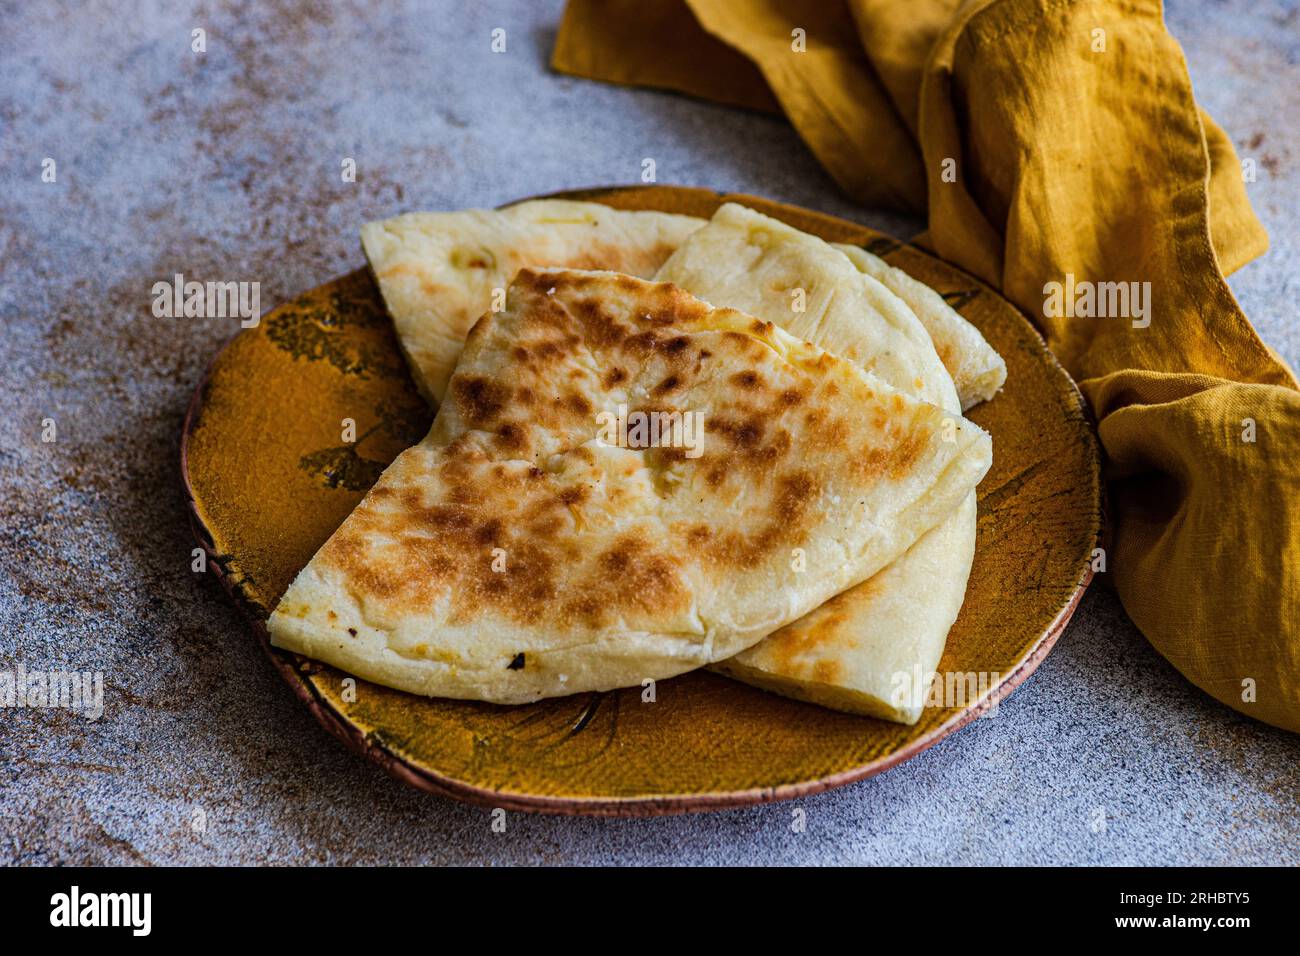 Close-up of Georgian cheese bread slices (Imeruli khachapuri) on a plate Stock Photo